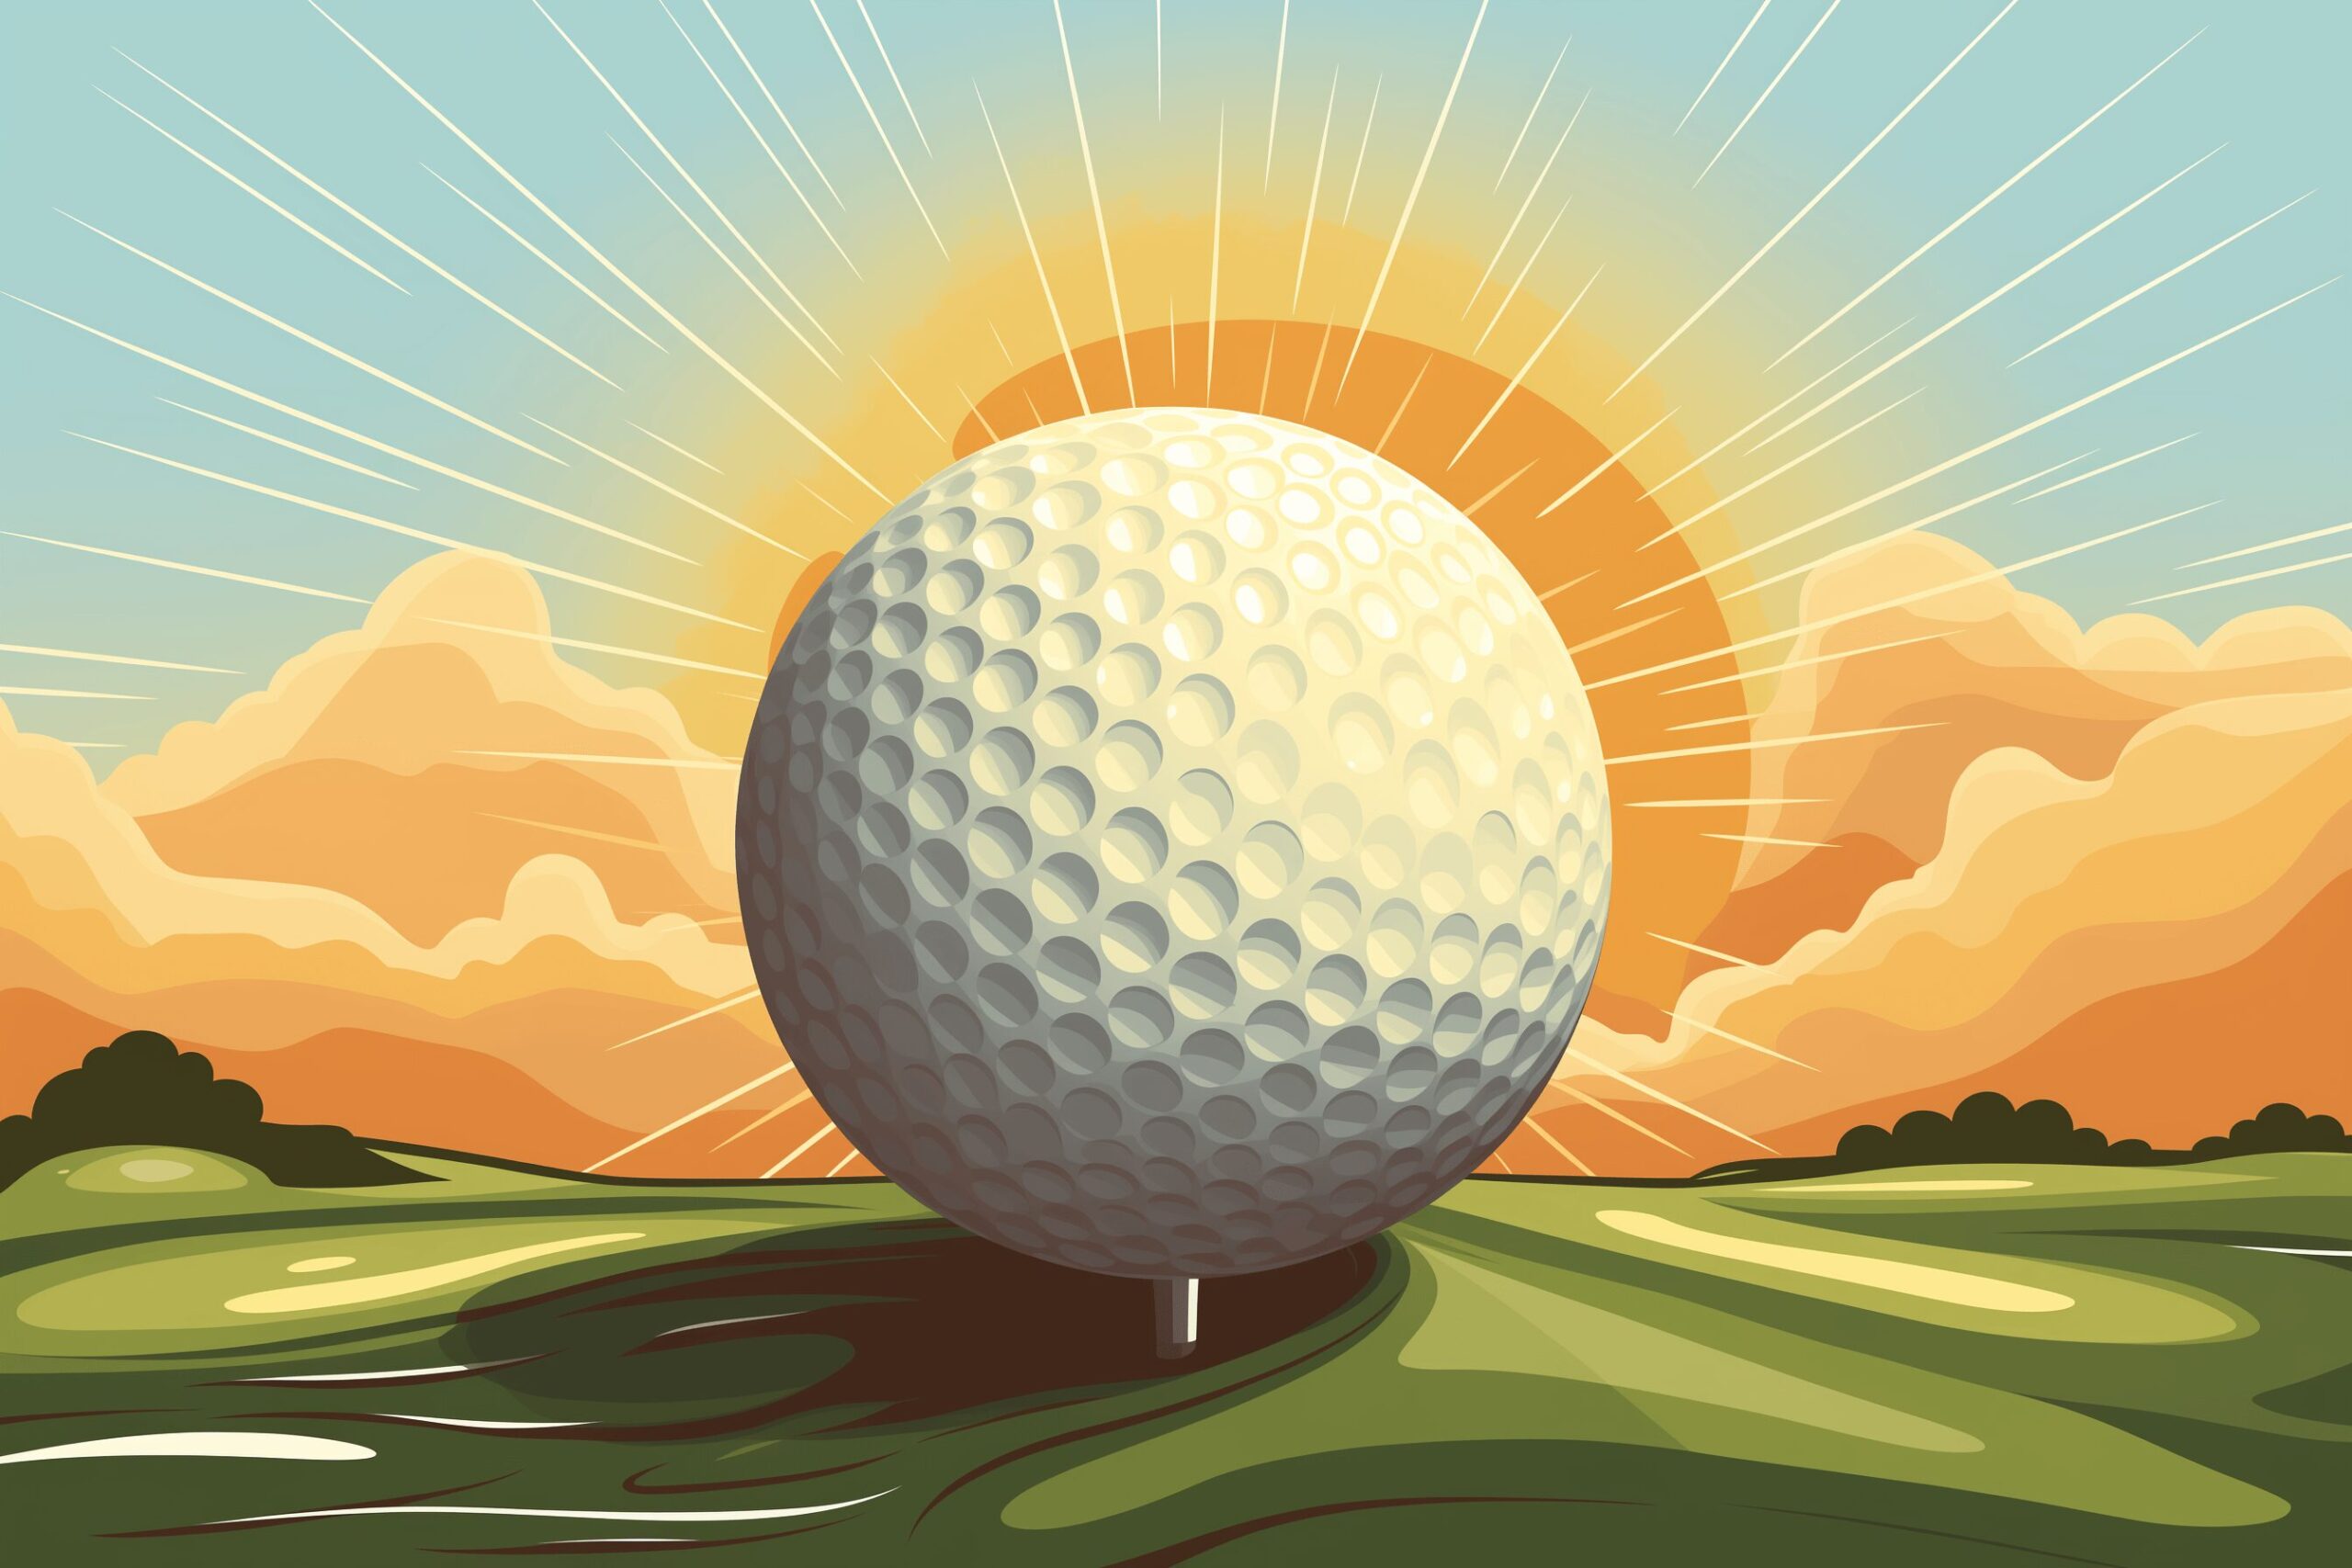 A single golf ball